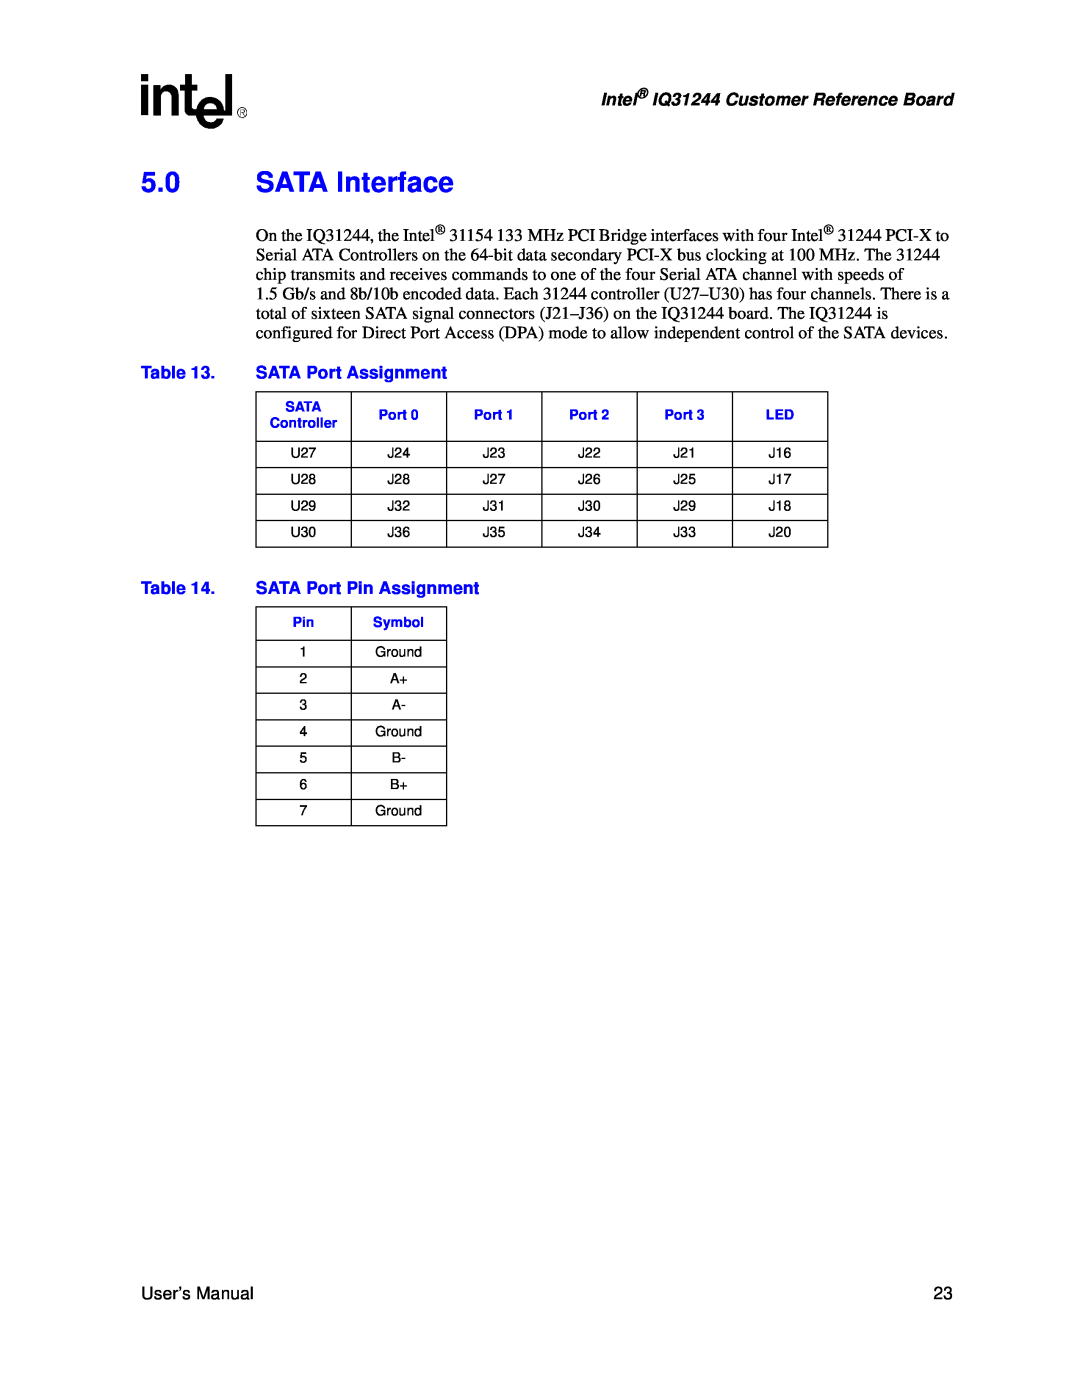 Intel 5.0SATA Interface, SATA Port Assignment, SATA Port Pin Assignment, Intel IQ31244 Customer Reference Board 